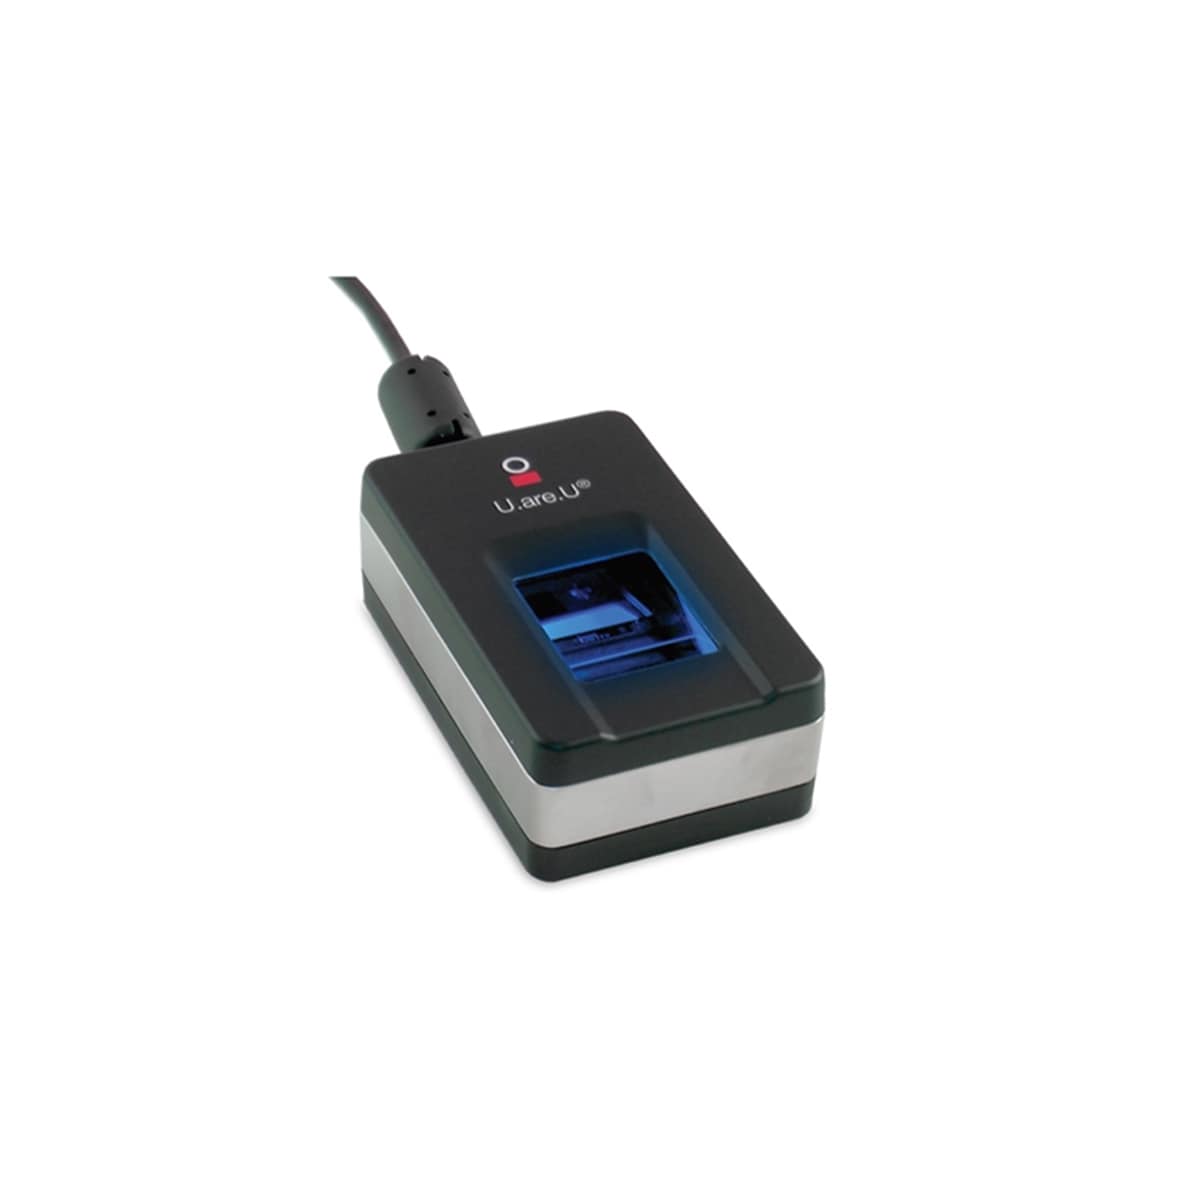 Crossmatch U.are.U 5300 FIPS 201/PIV, Fingerprint 30 Fulcrum USB – Certified FAP Biometrics, Inc